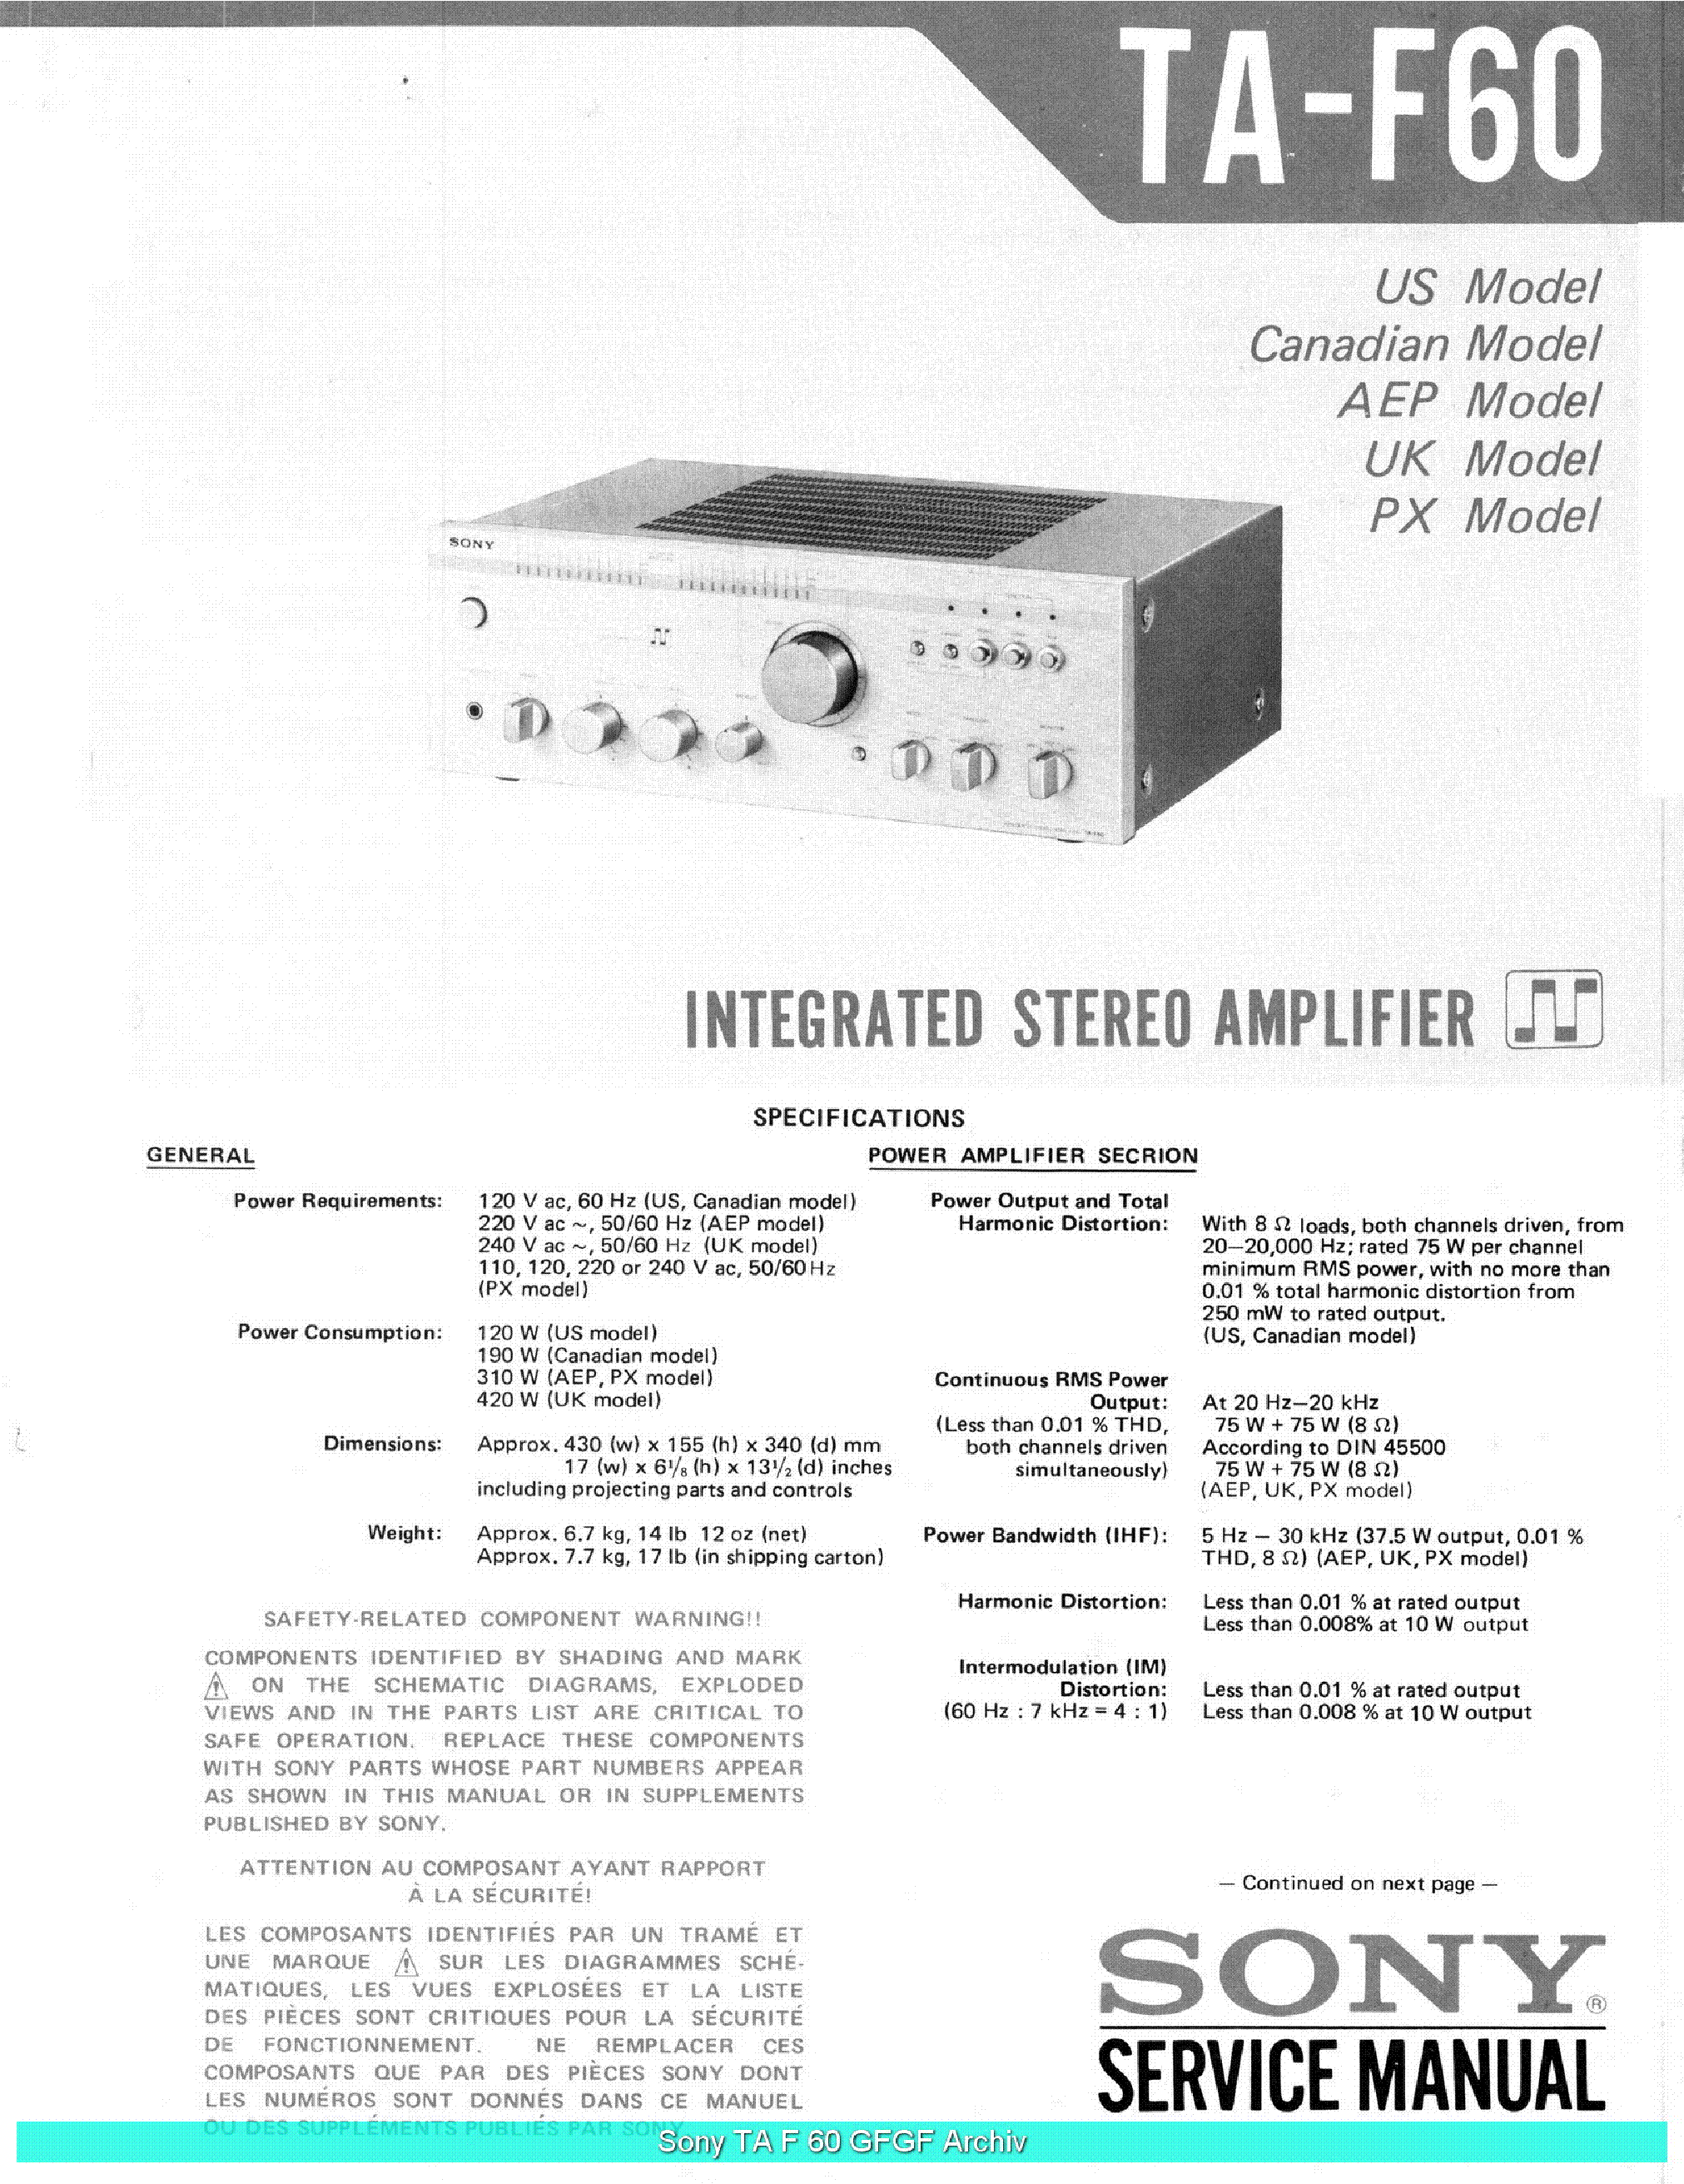 SONY TA-F60 SCH service manual (1st page)